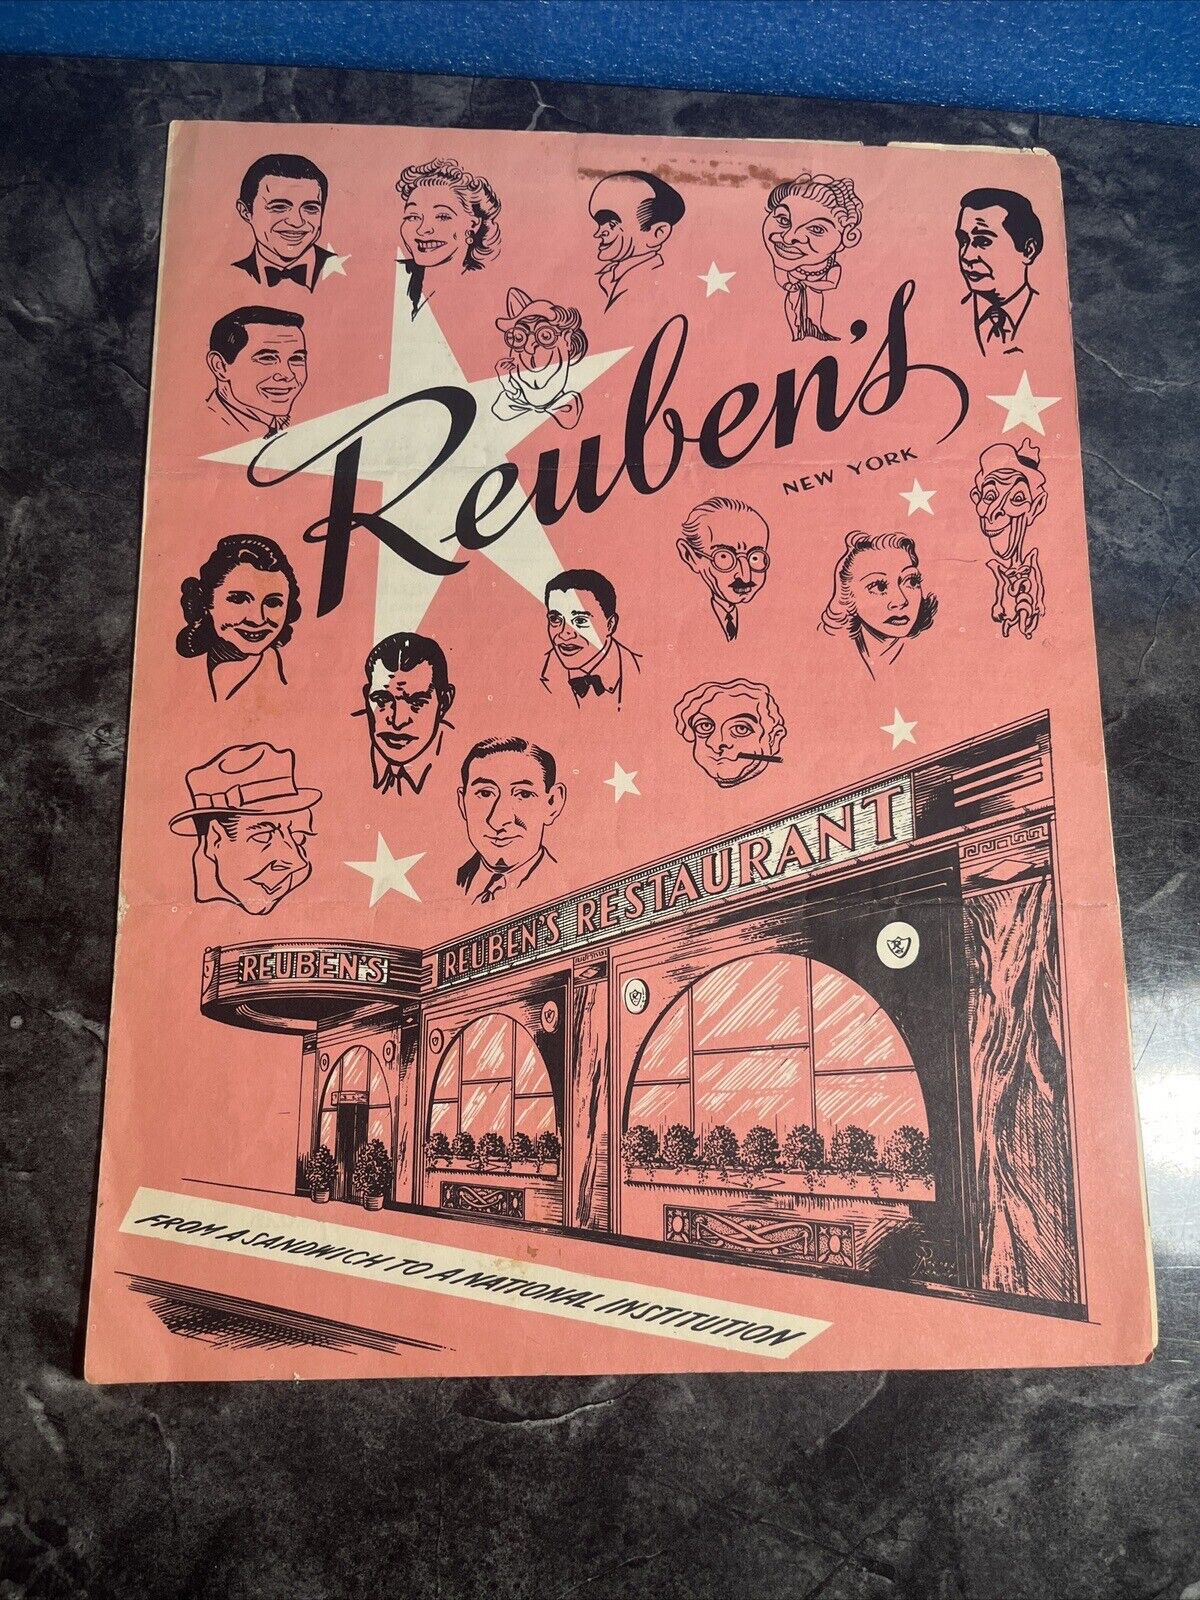 Menu from Reuben's Restaurant New York for 1969.